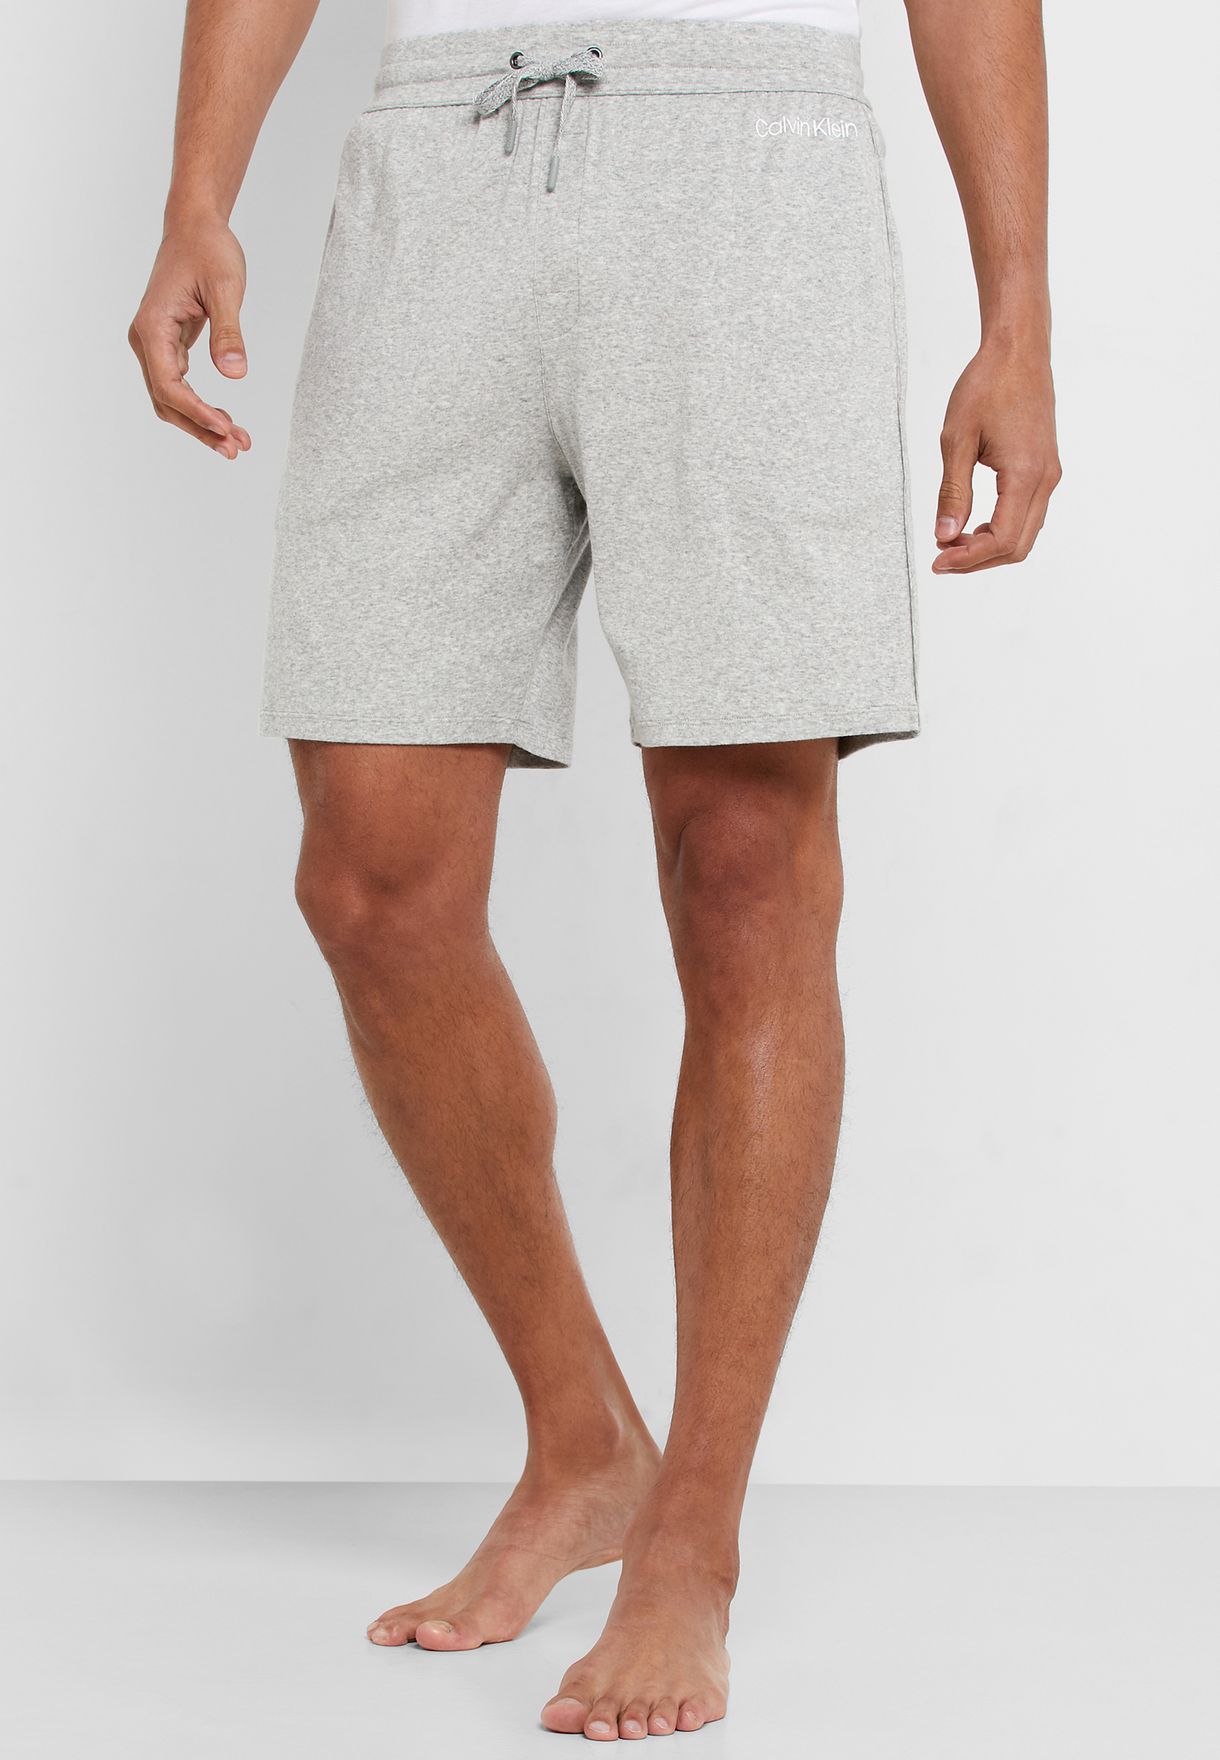 calvin klein pyjama shorts